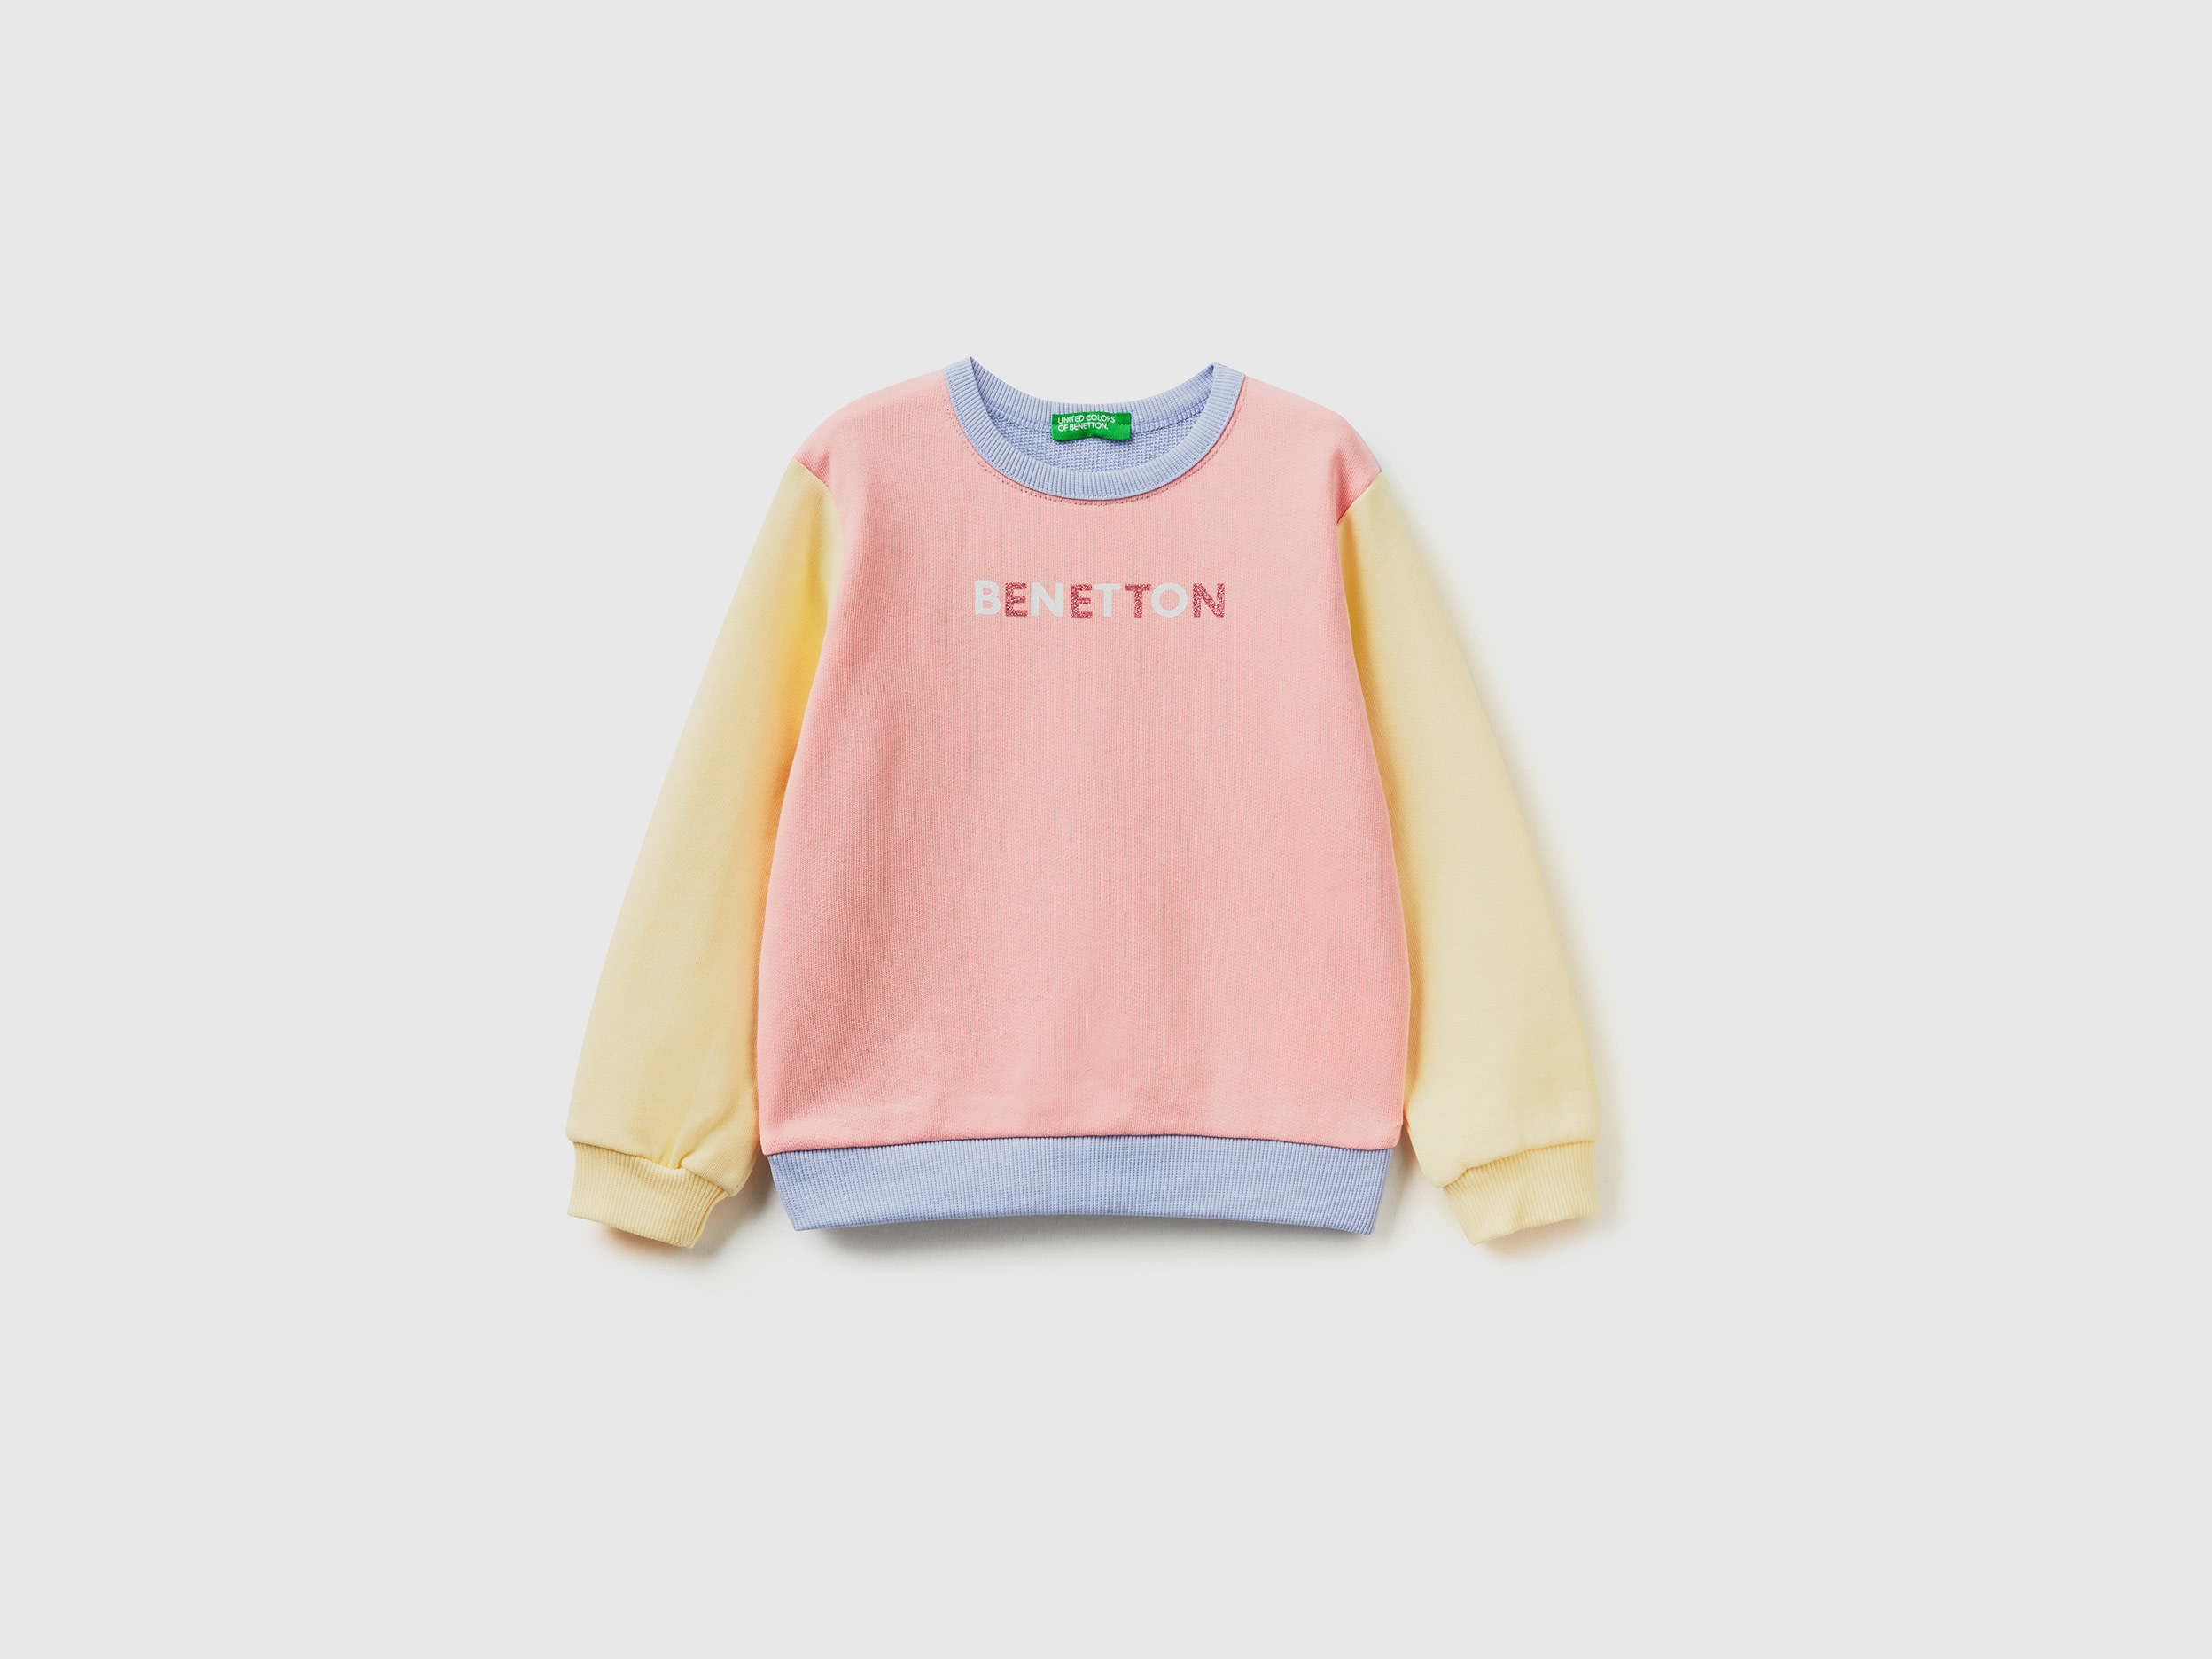 Benetton, Color Block Sweatshirt In Organic Cotton With Glittery Print, size 4-5, Multi-color, Kids